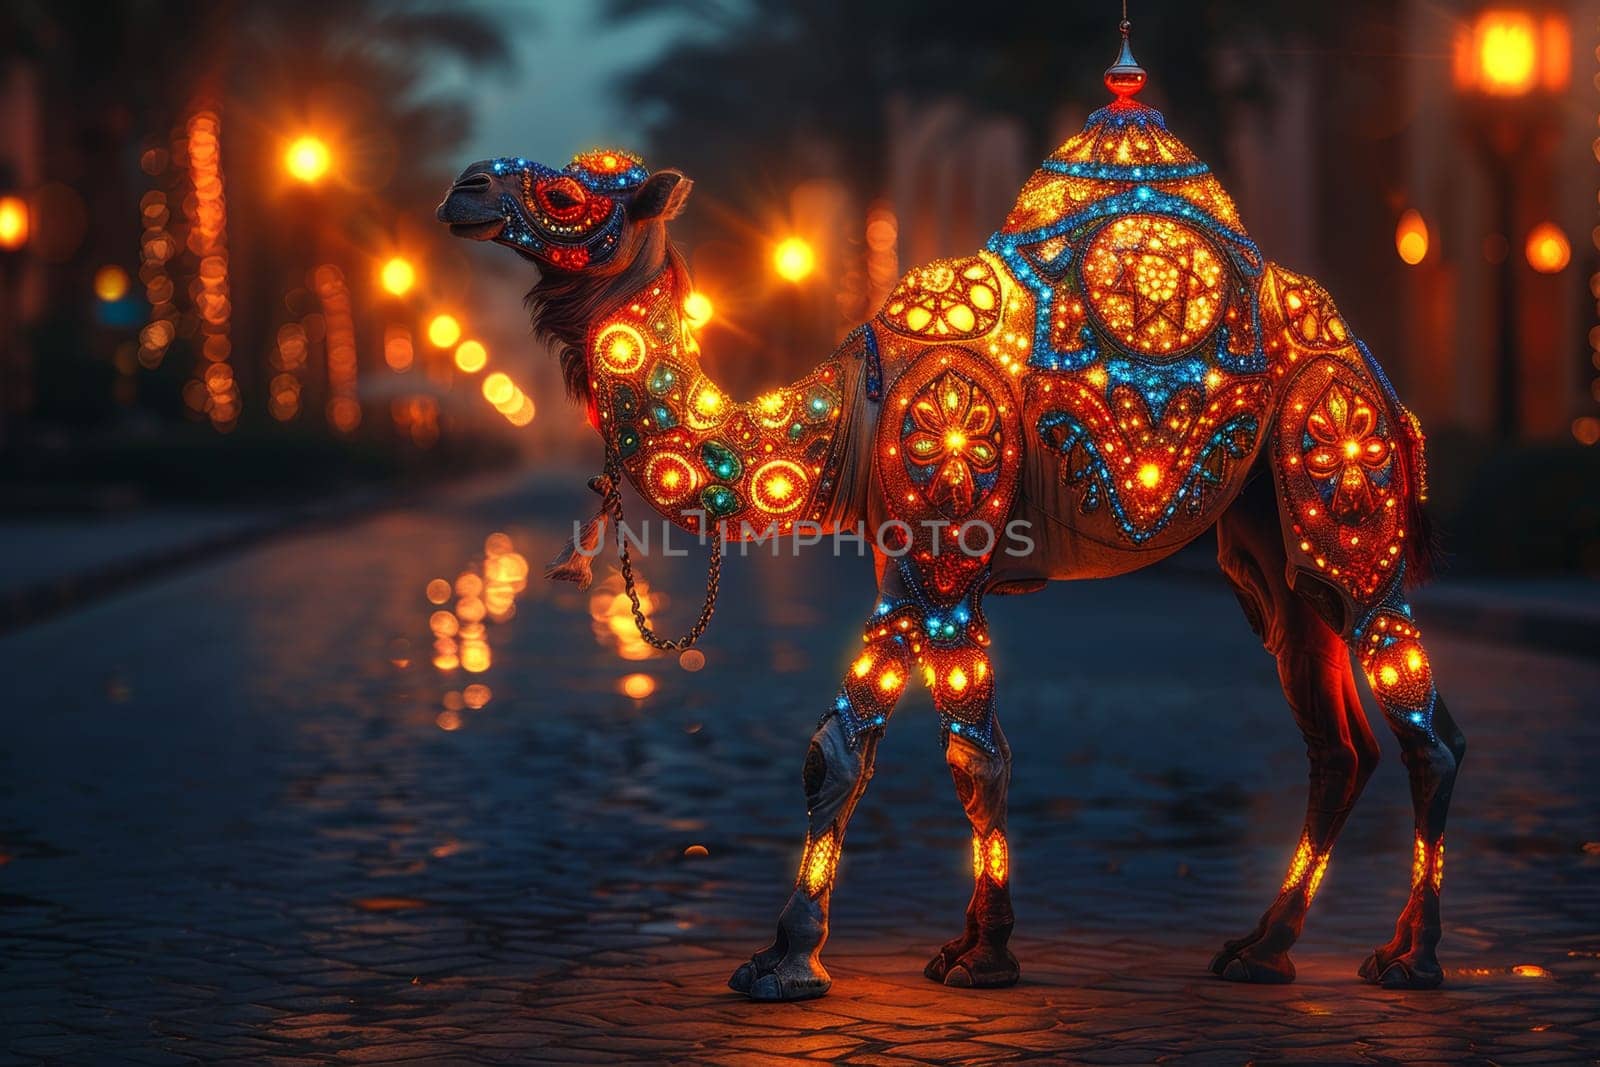 The camel is a symbol of the Islamic ritual sacrifice of Eid al-Adha, the symbol of Eid al-Adha or Eid ul-Kabir.